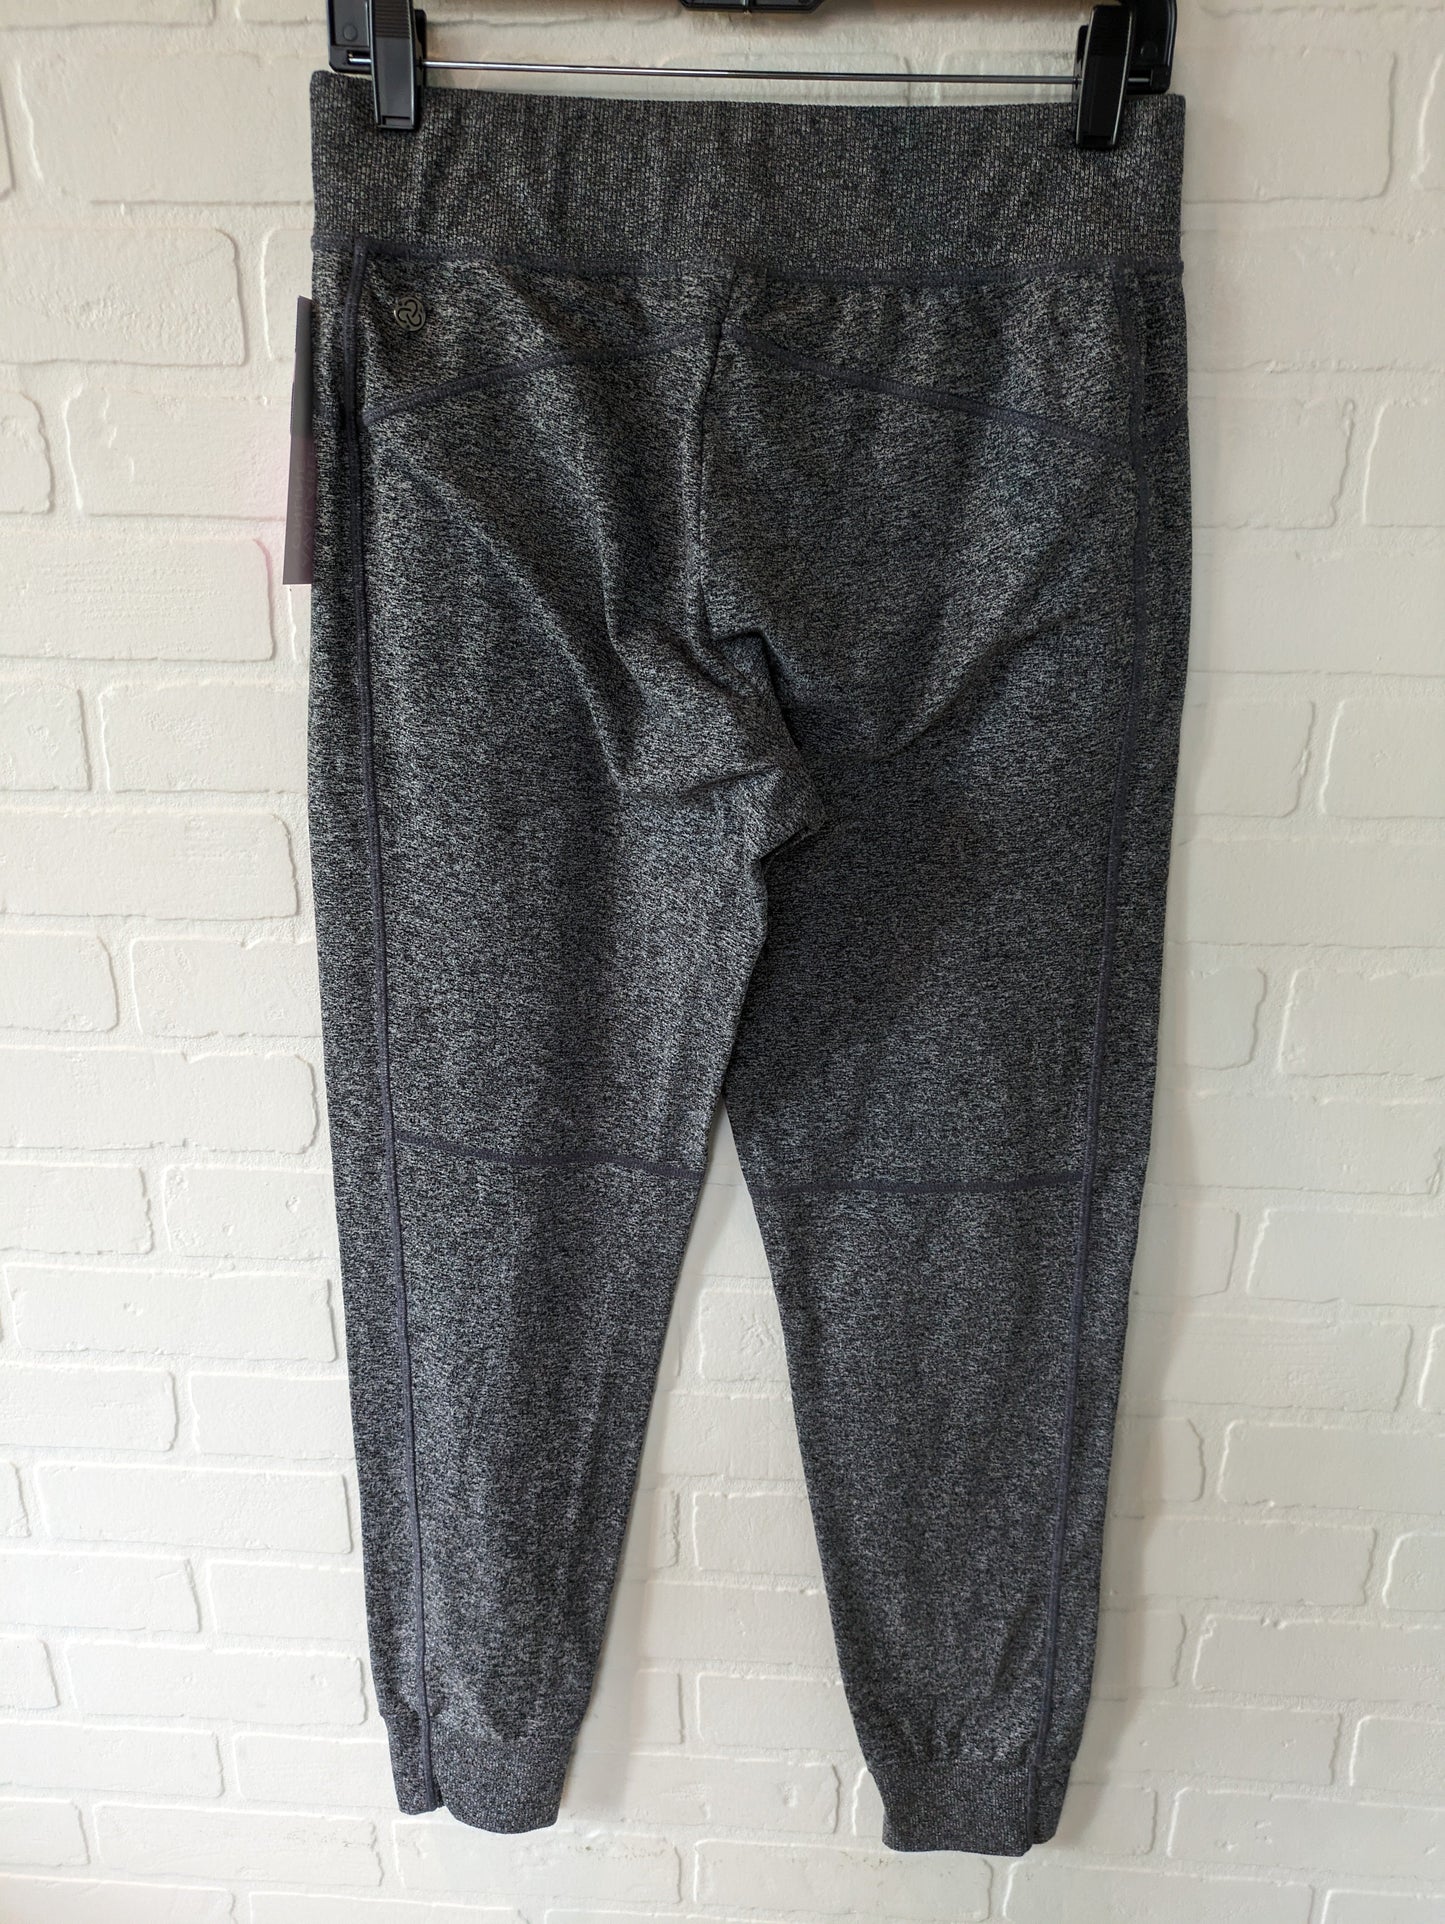 Grey Athletic Pants Zella, Size 8